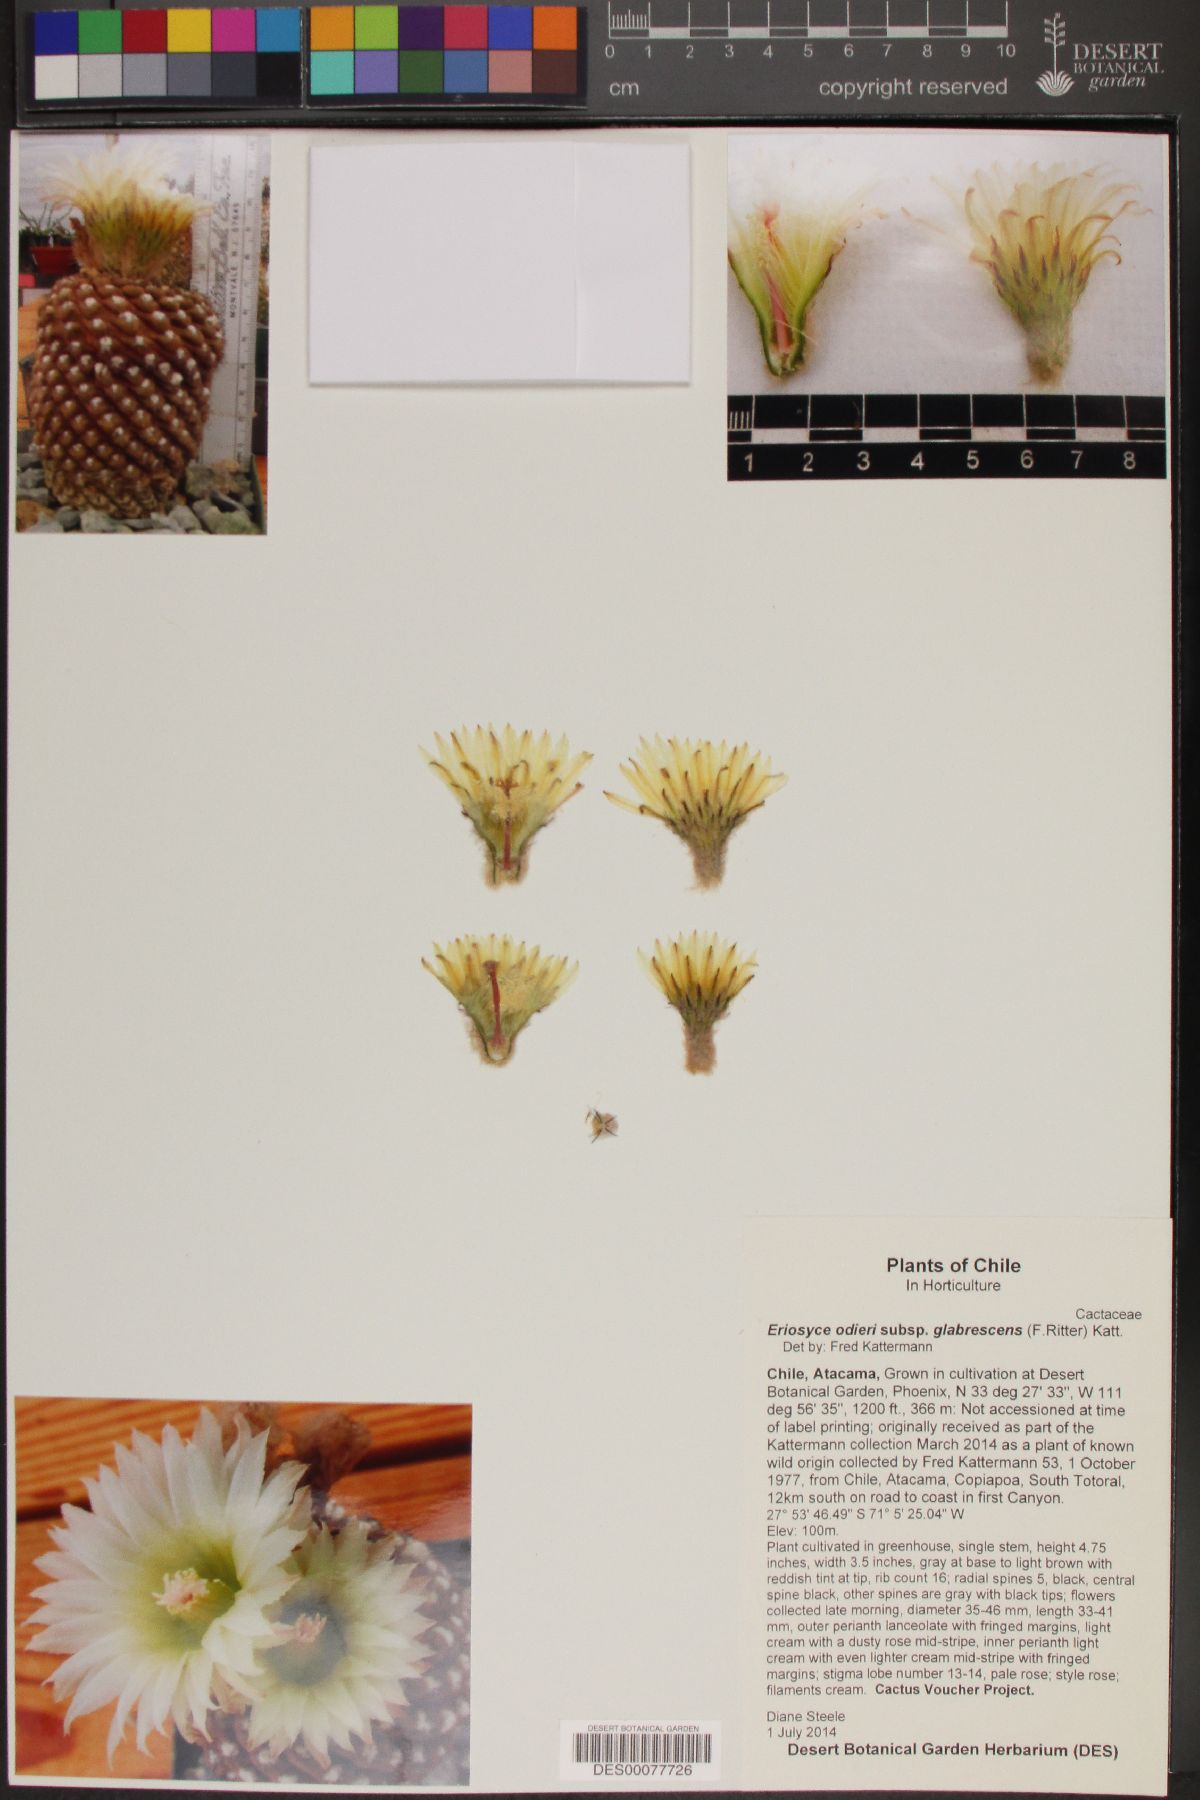 Eriosyce odieri subsp. glabrescens image